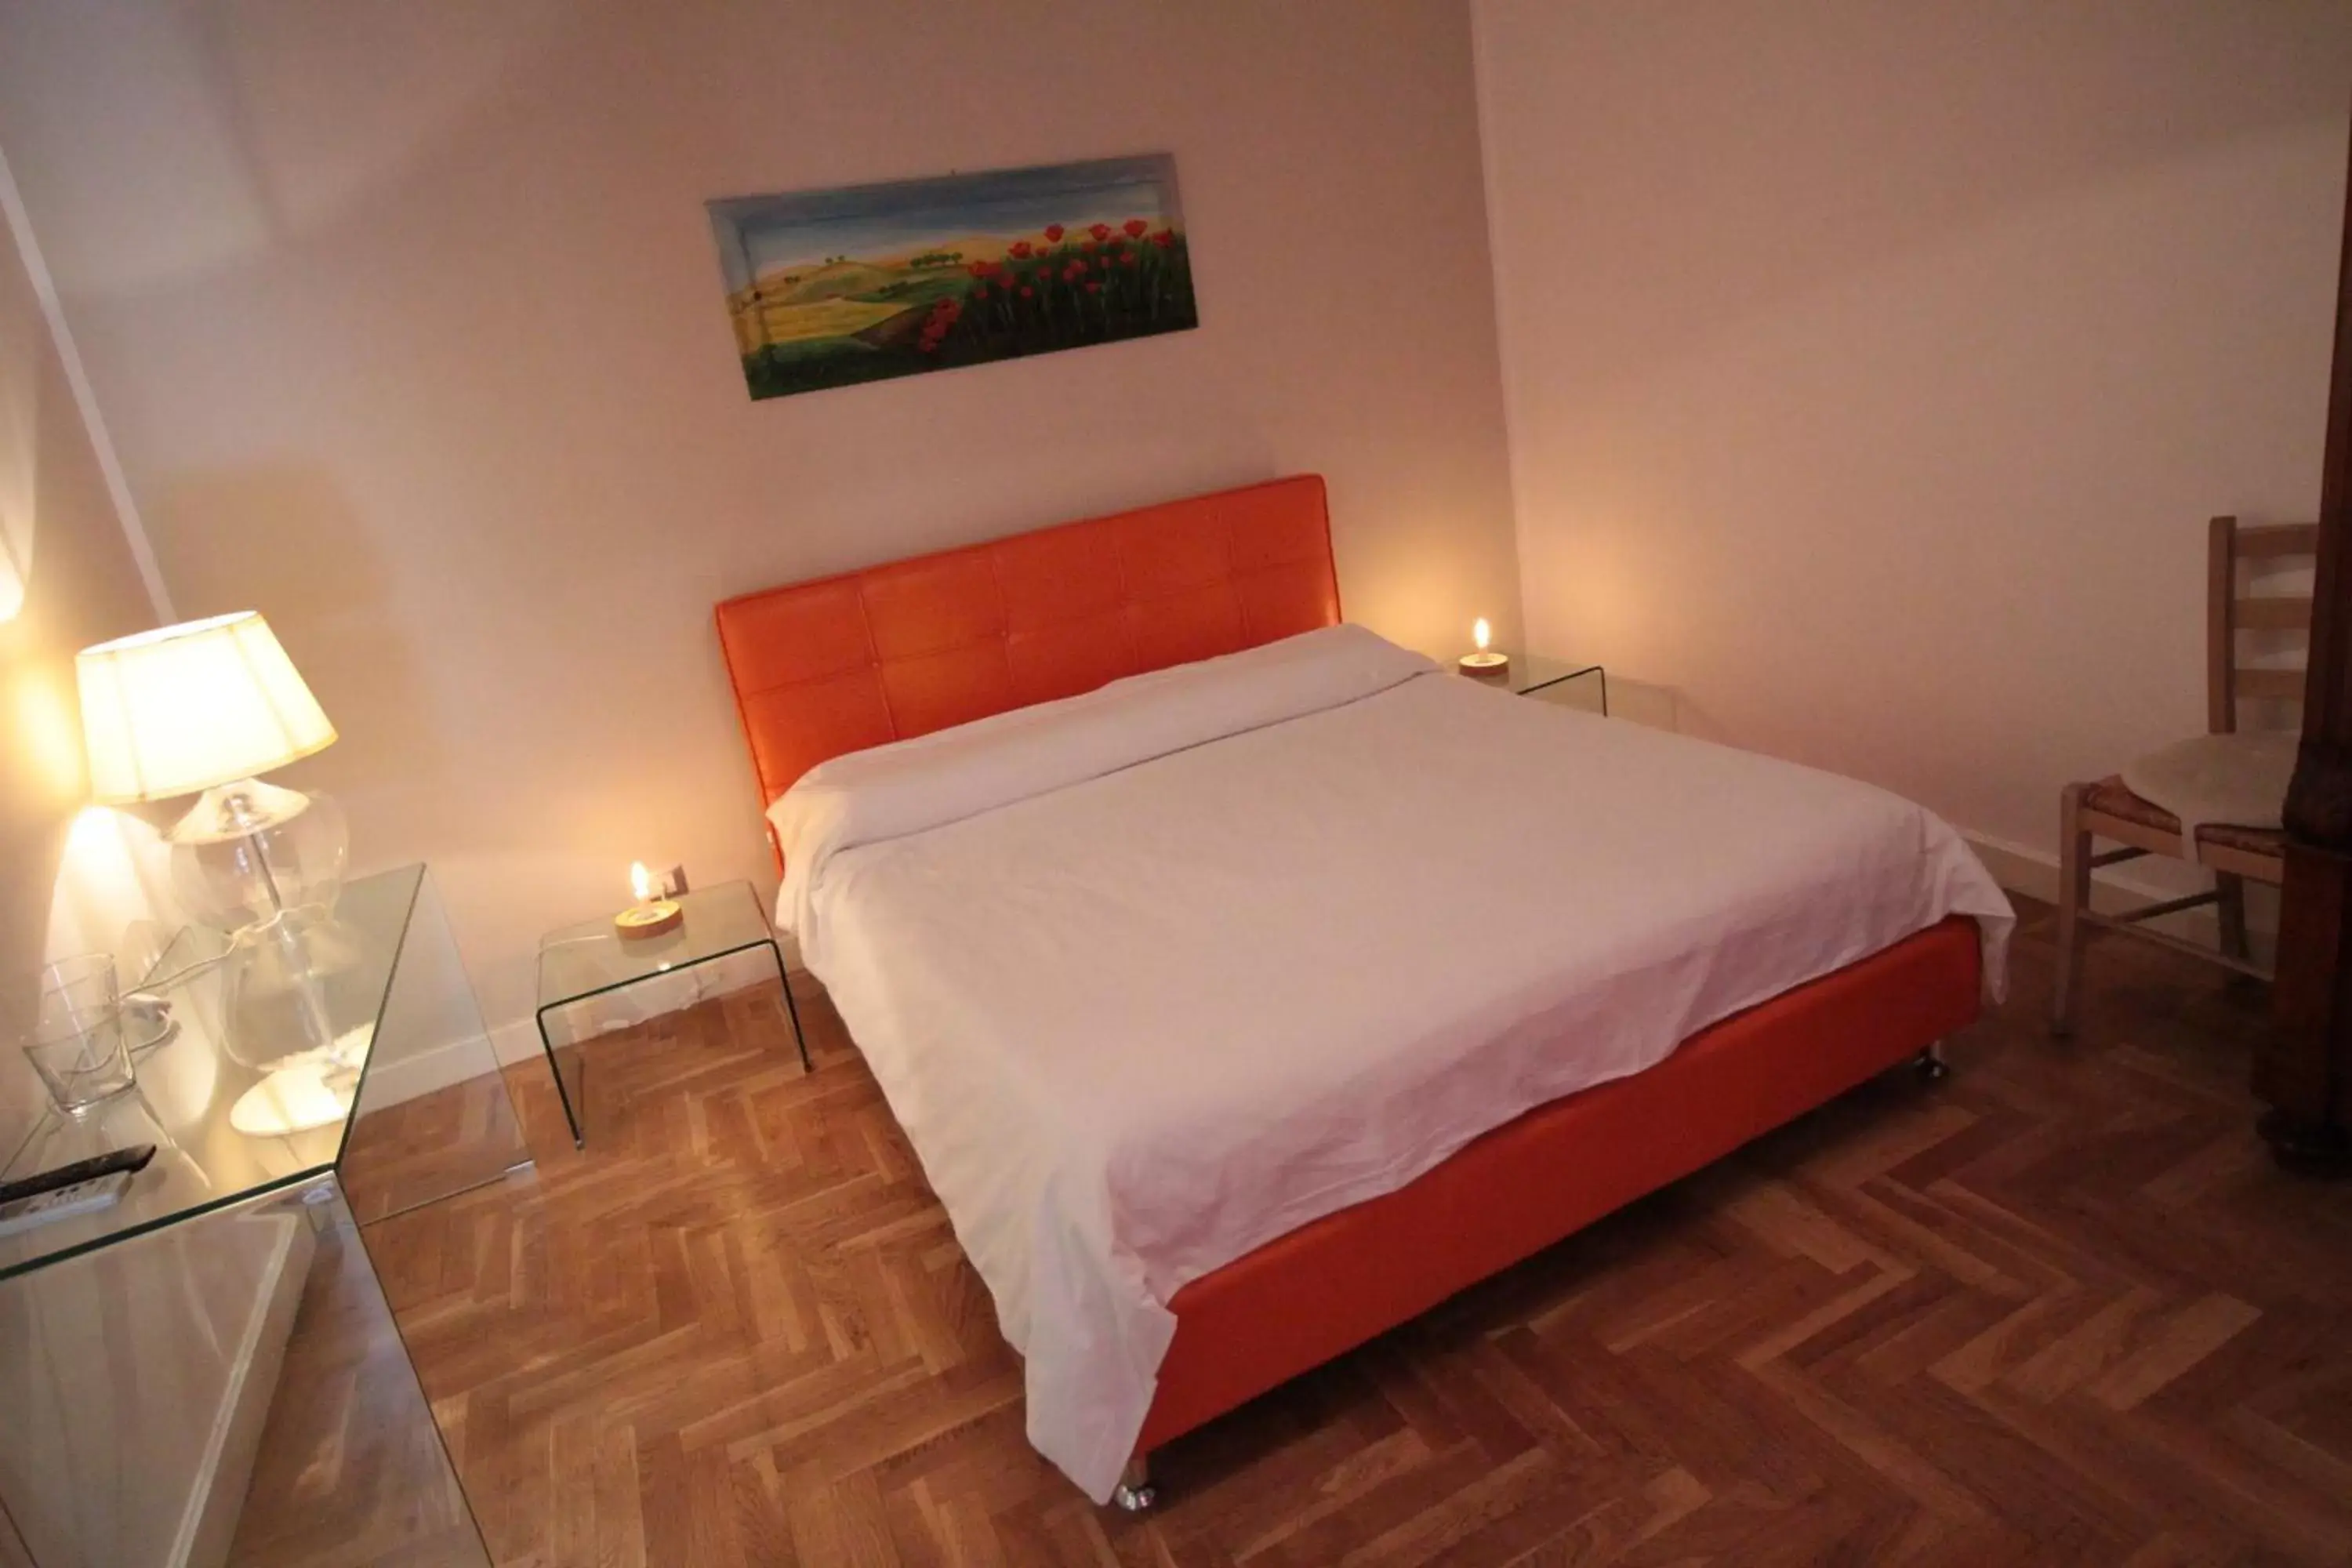 Bedroom, Bed in Federico Secondo B&B